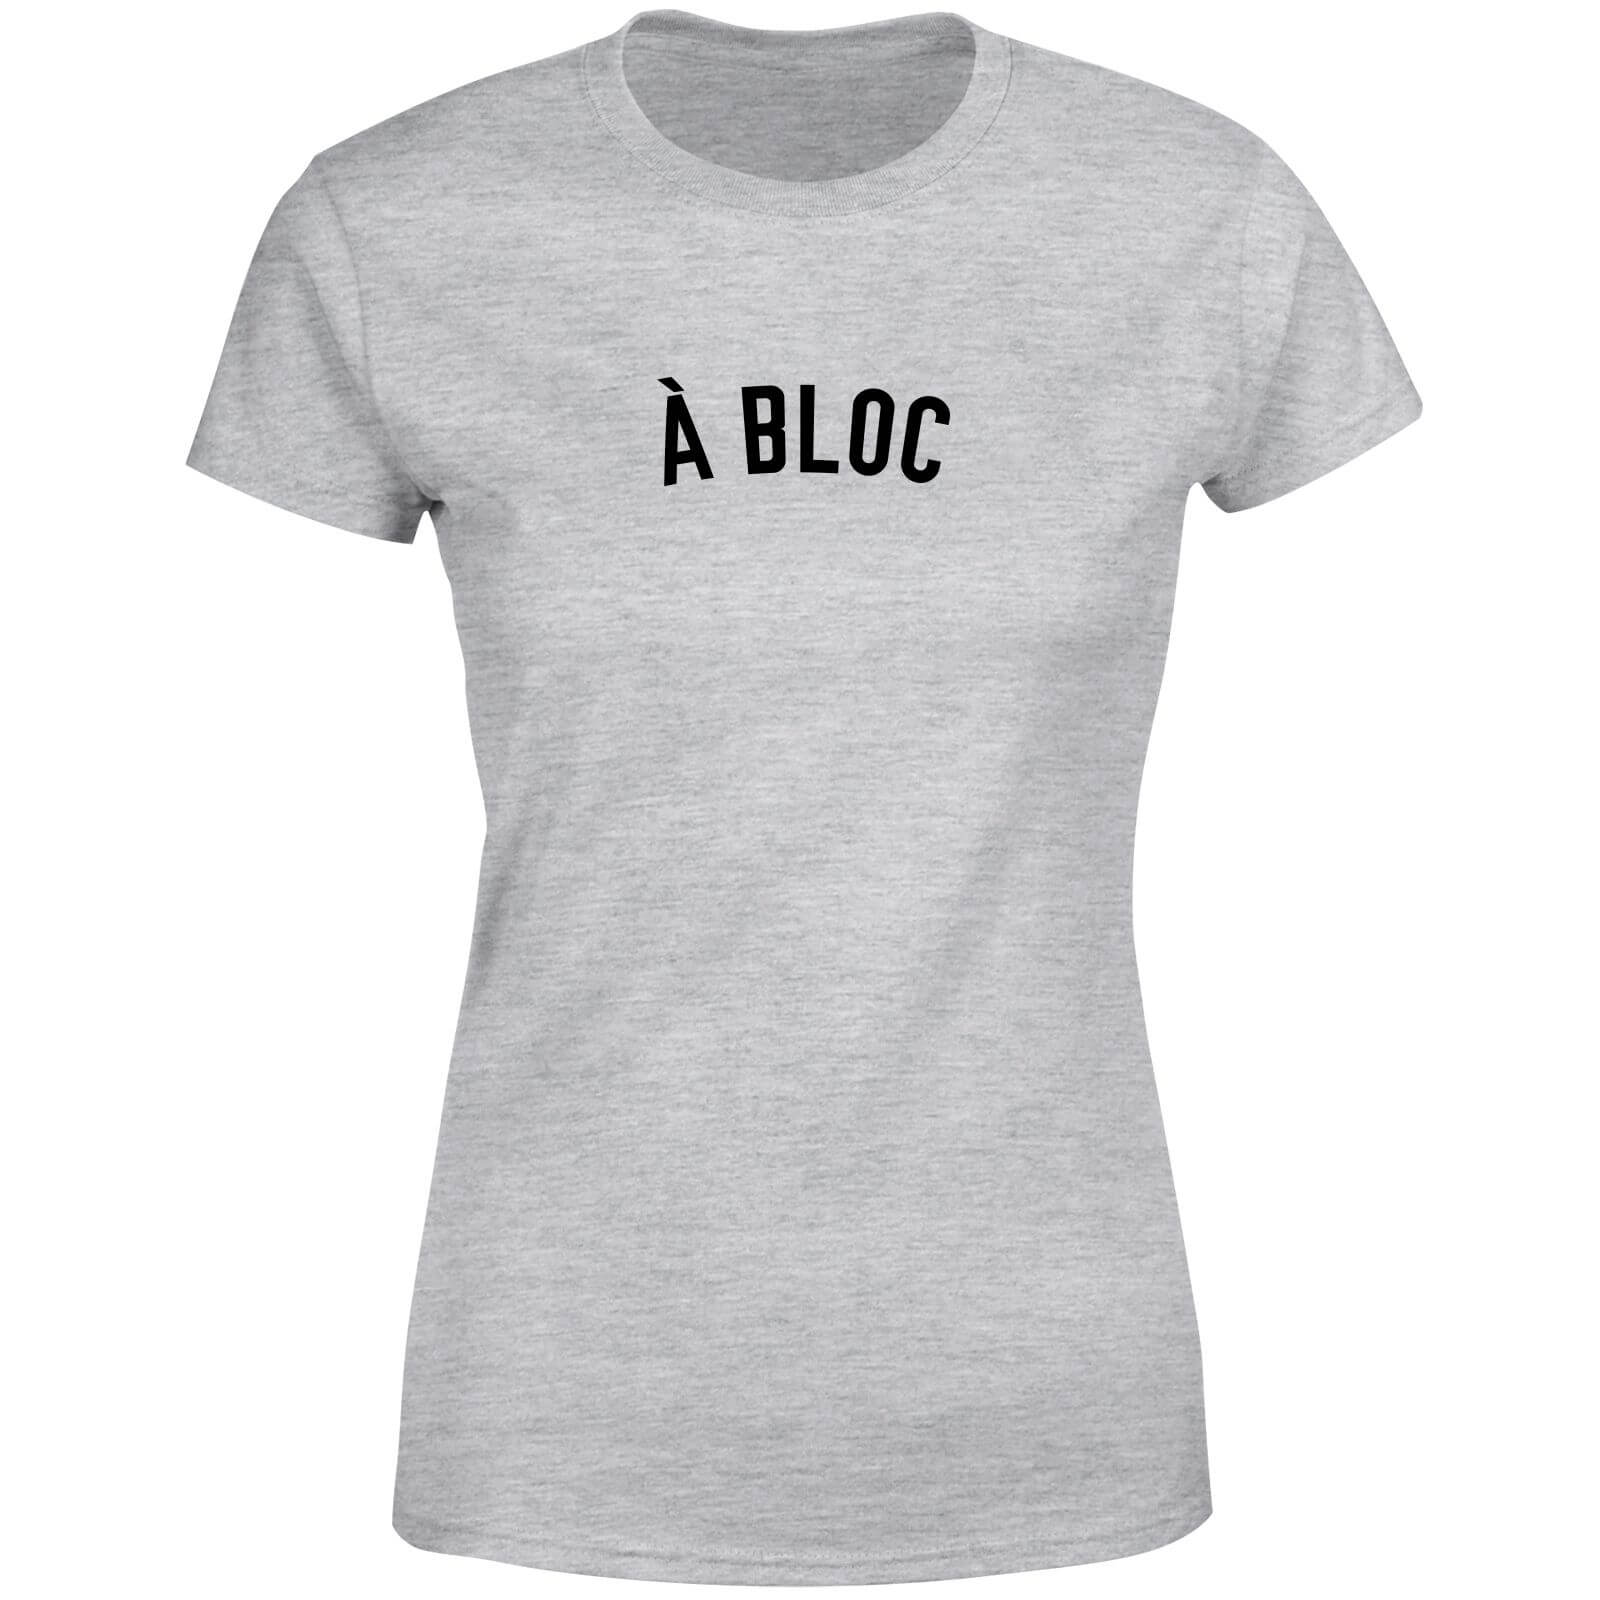 A Bloc Women's T-Shirt - Grey - 4XL - Grey